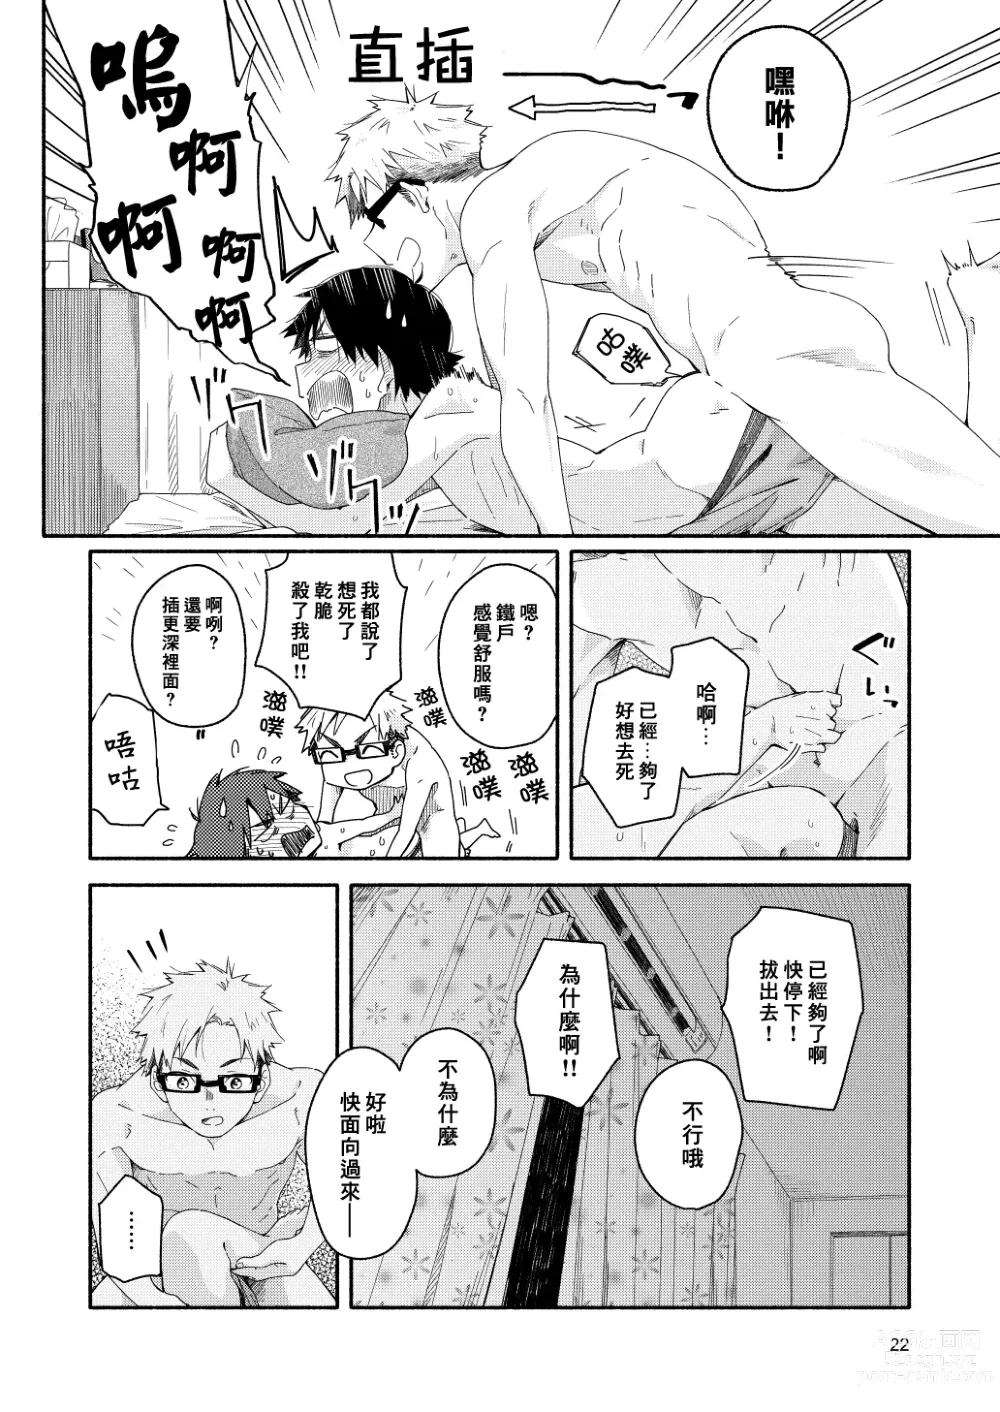 Page 20 of doujinshi sugar-ism